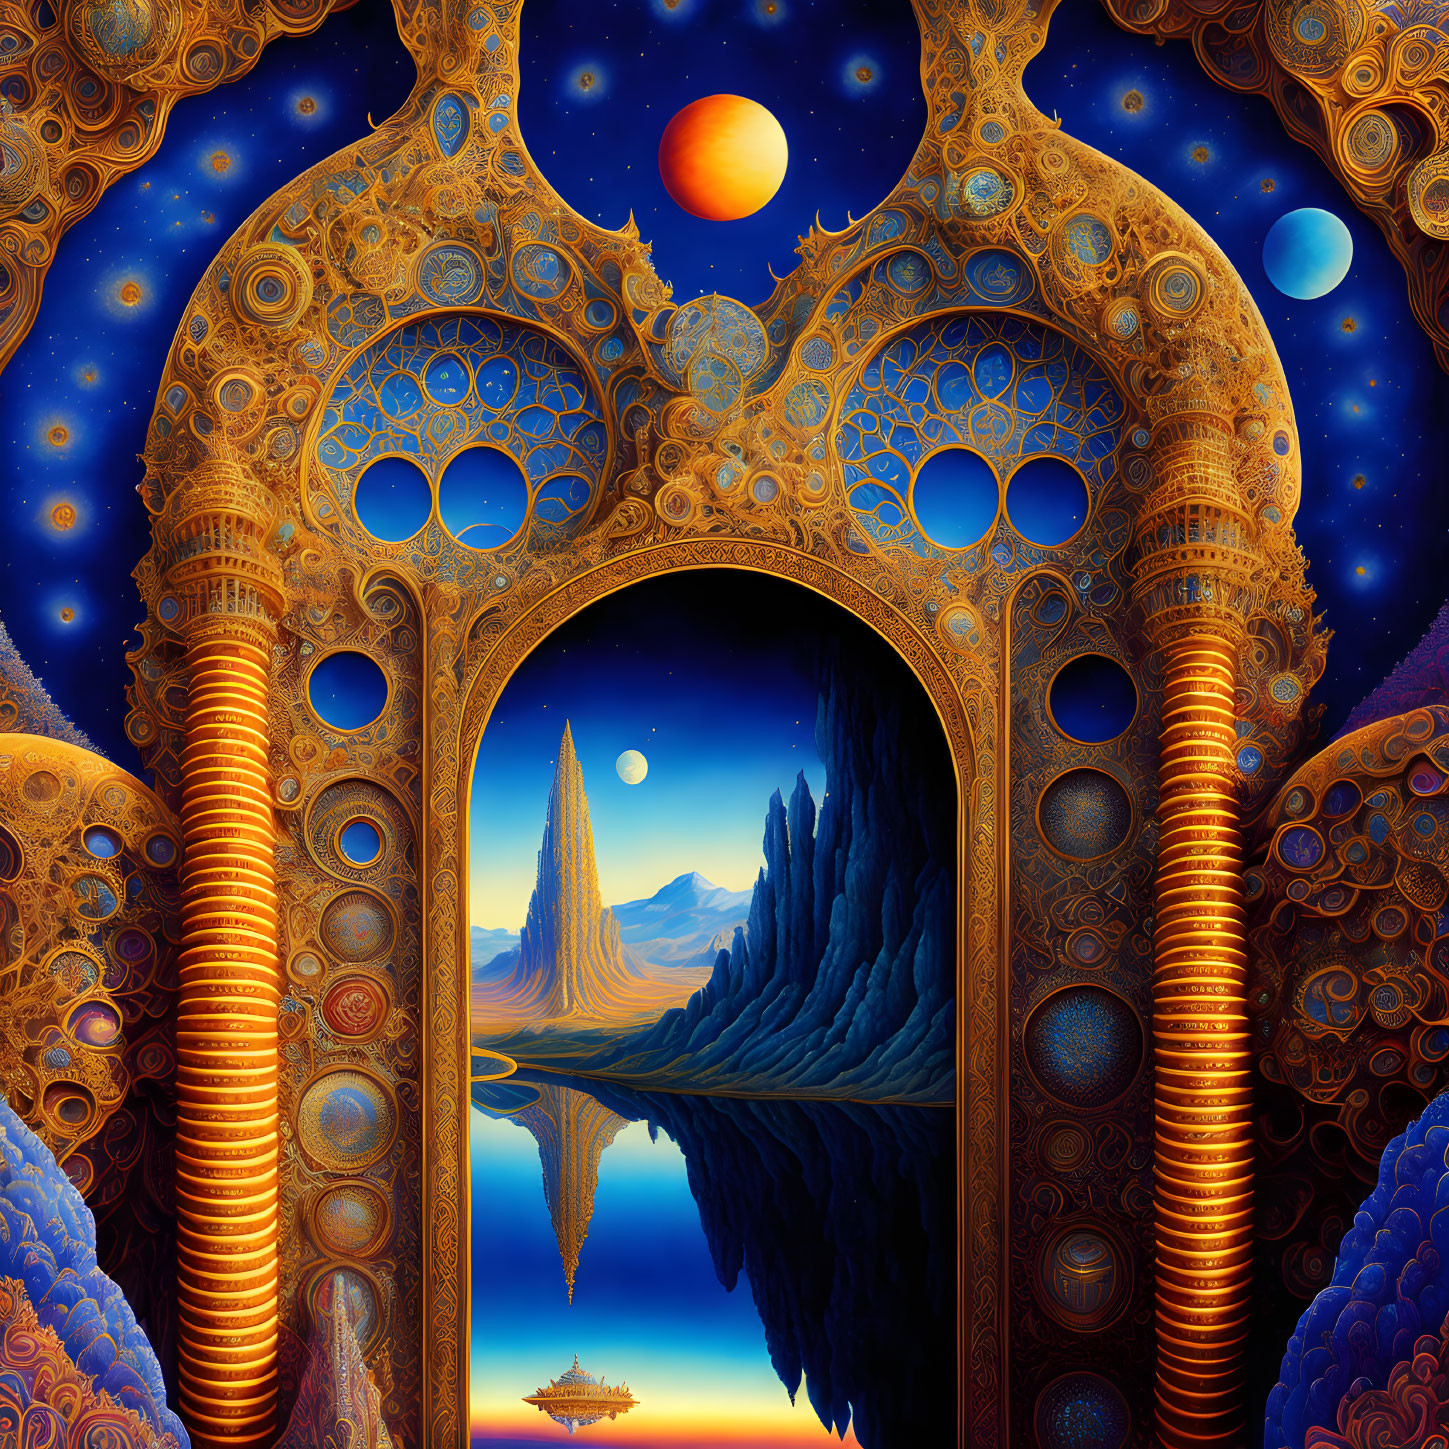  the doors of perception